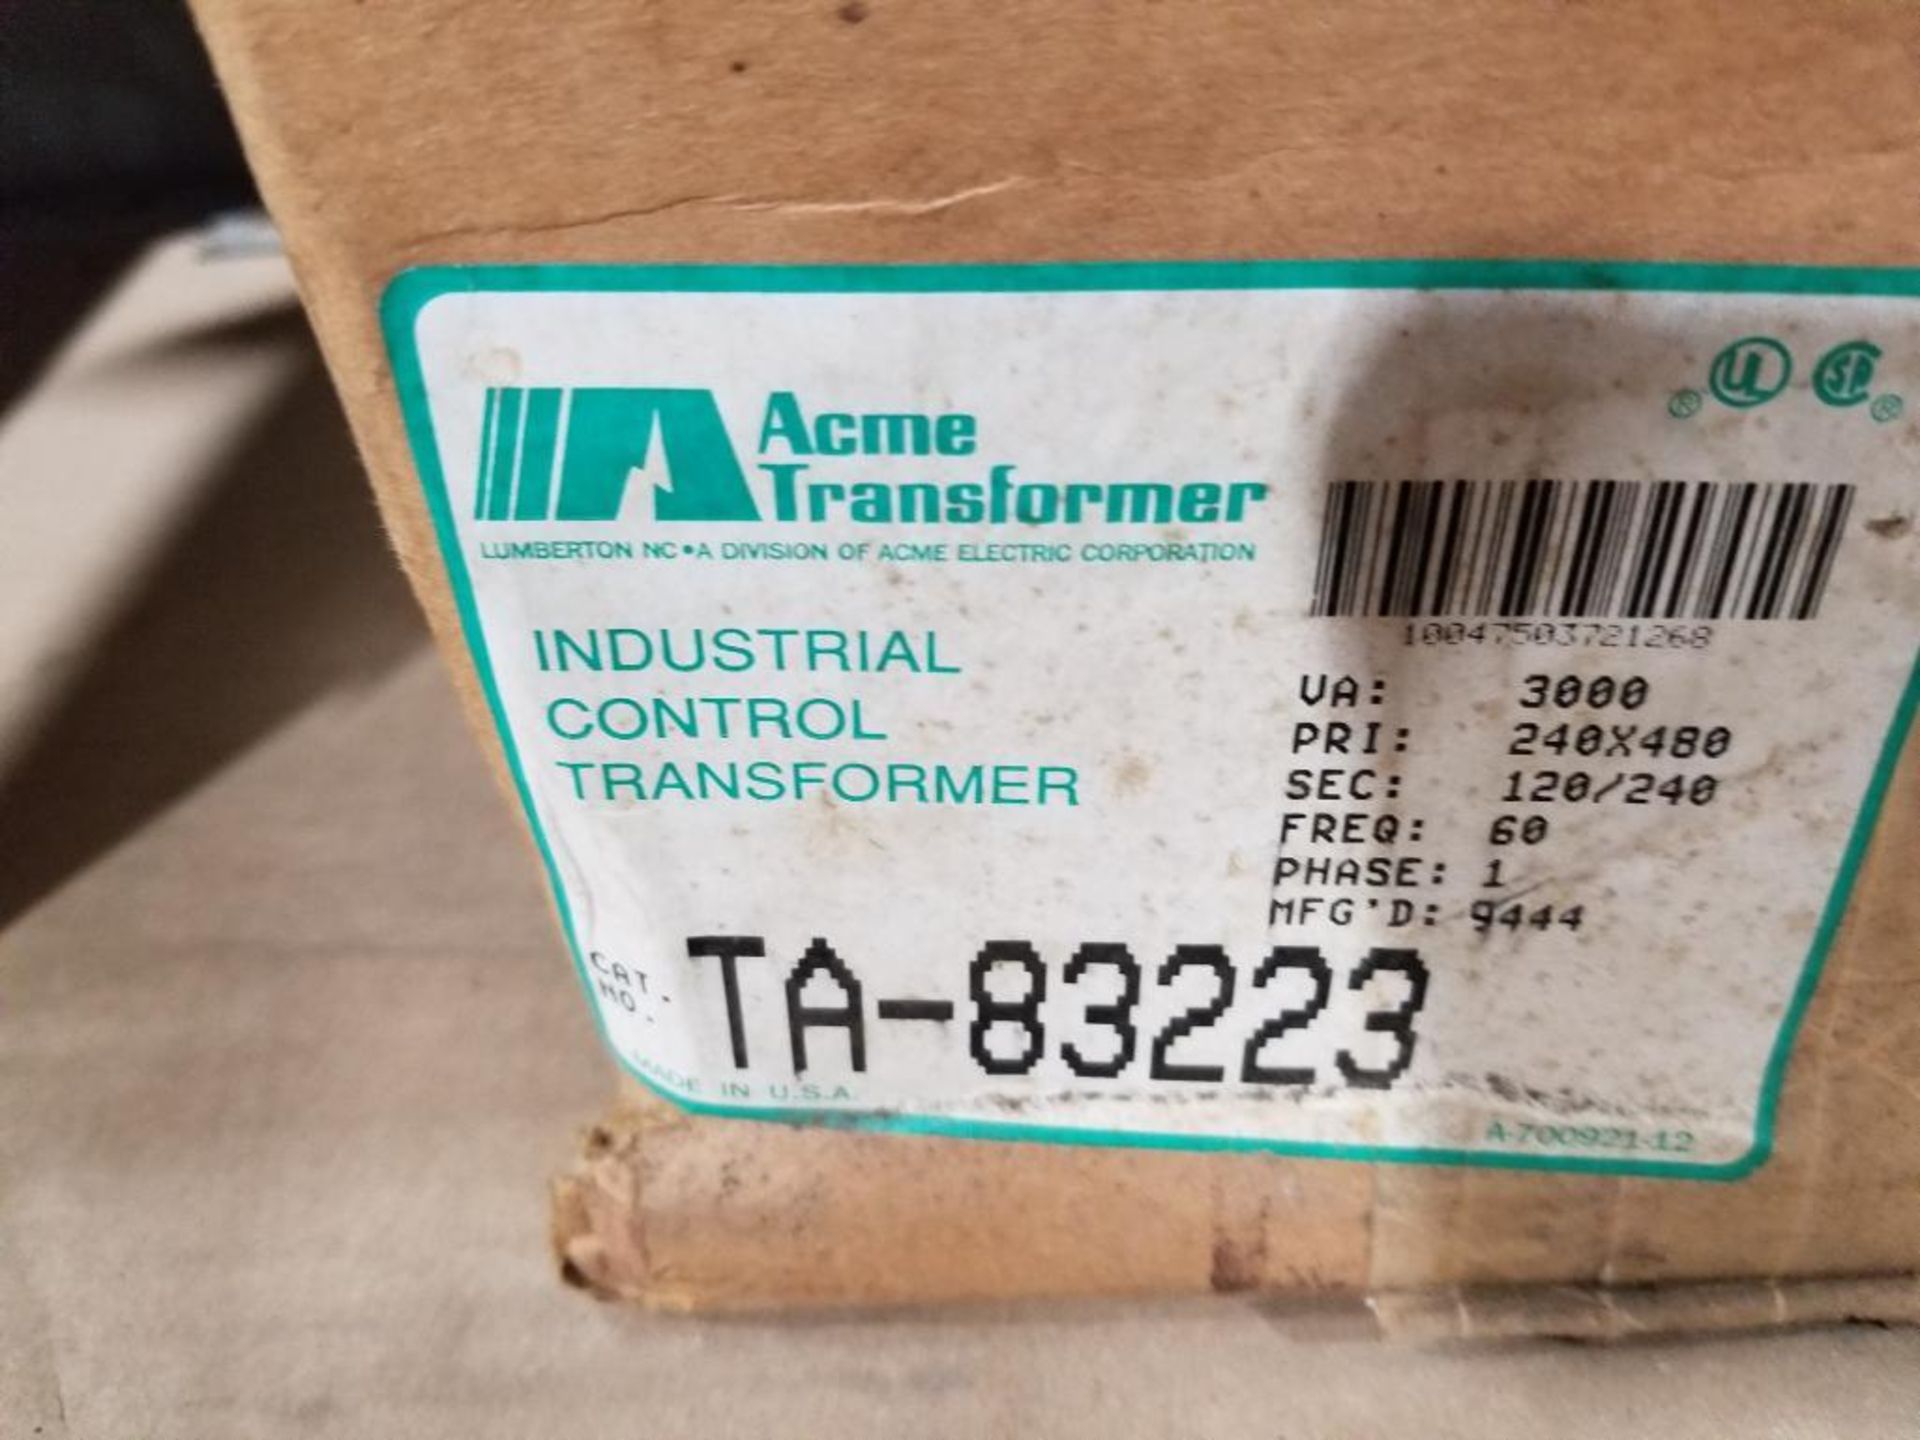 Acme Transformer TA-83223 industrial control transformer. 3000VA, 1PH. - Image 2 of 3